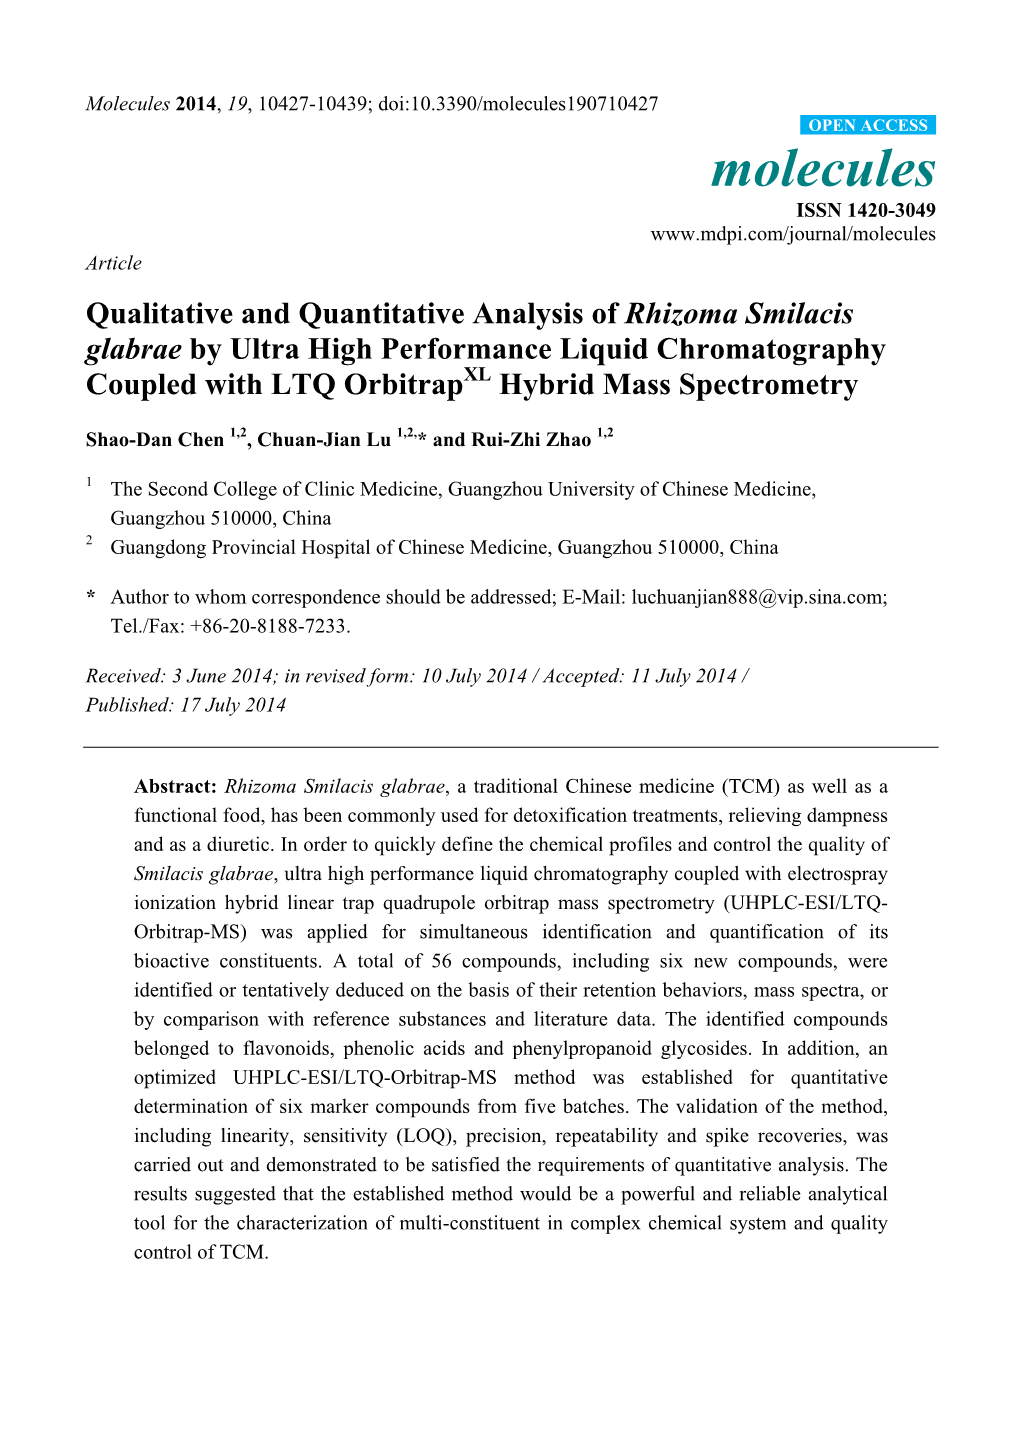 Qualitative and Quantitative Analysis of Rhizoma Smilacis Glabrae By